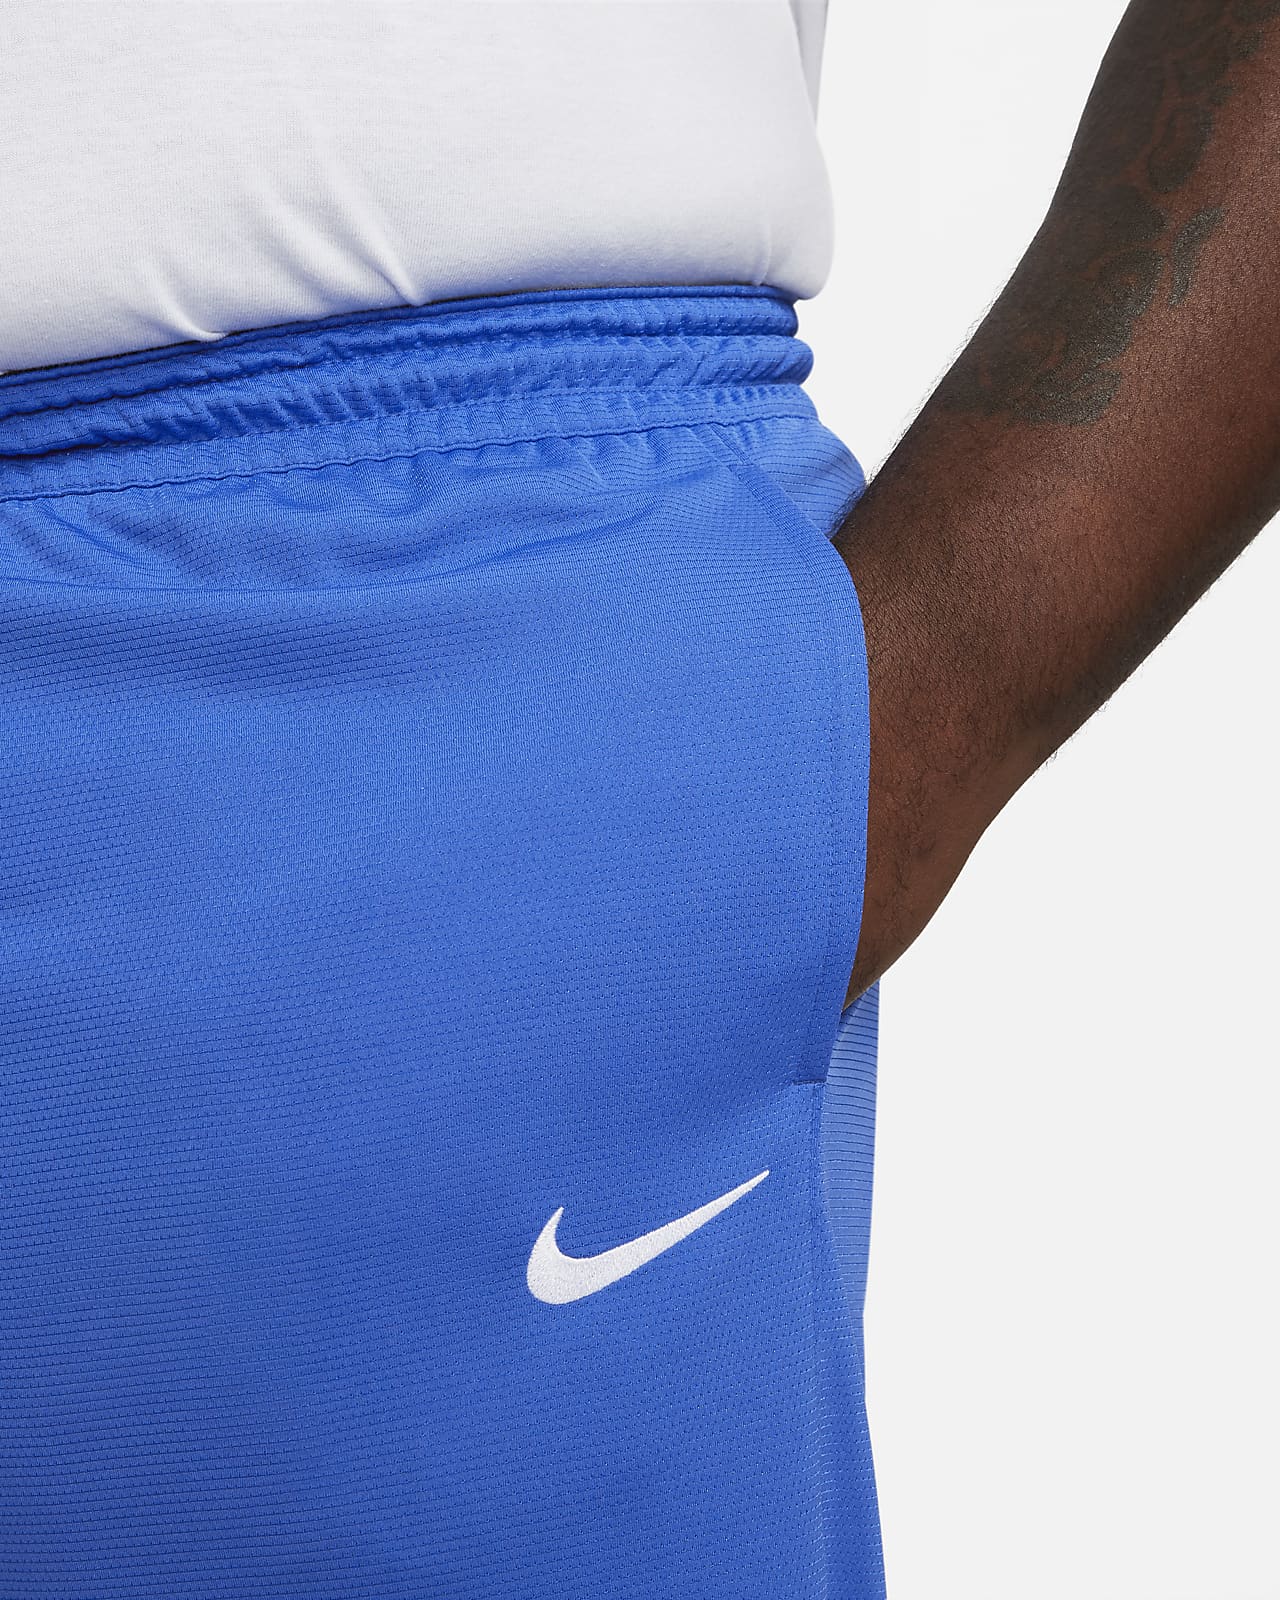 Nike Dri-FIT Icon Men's Basketball Shorts.